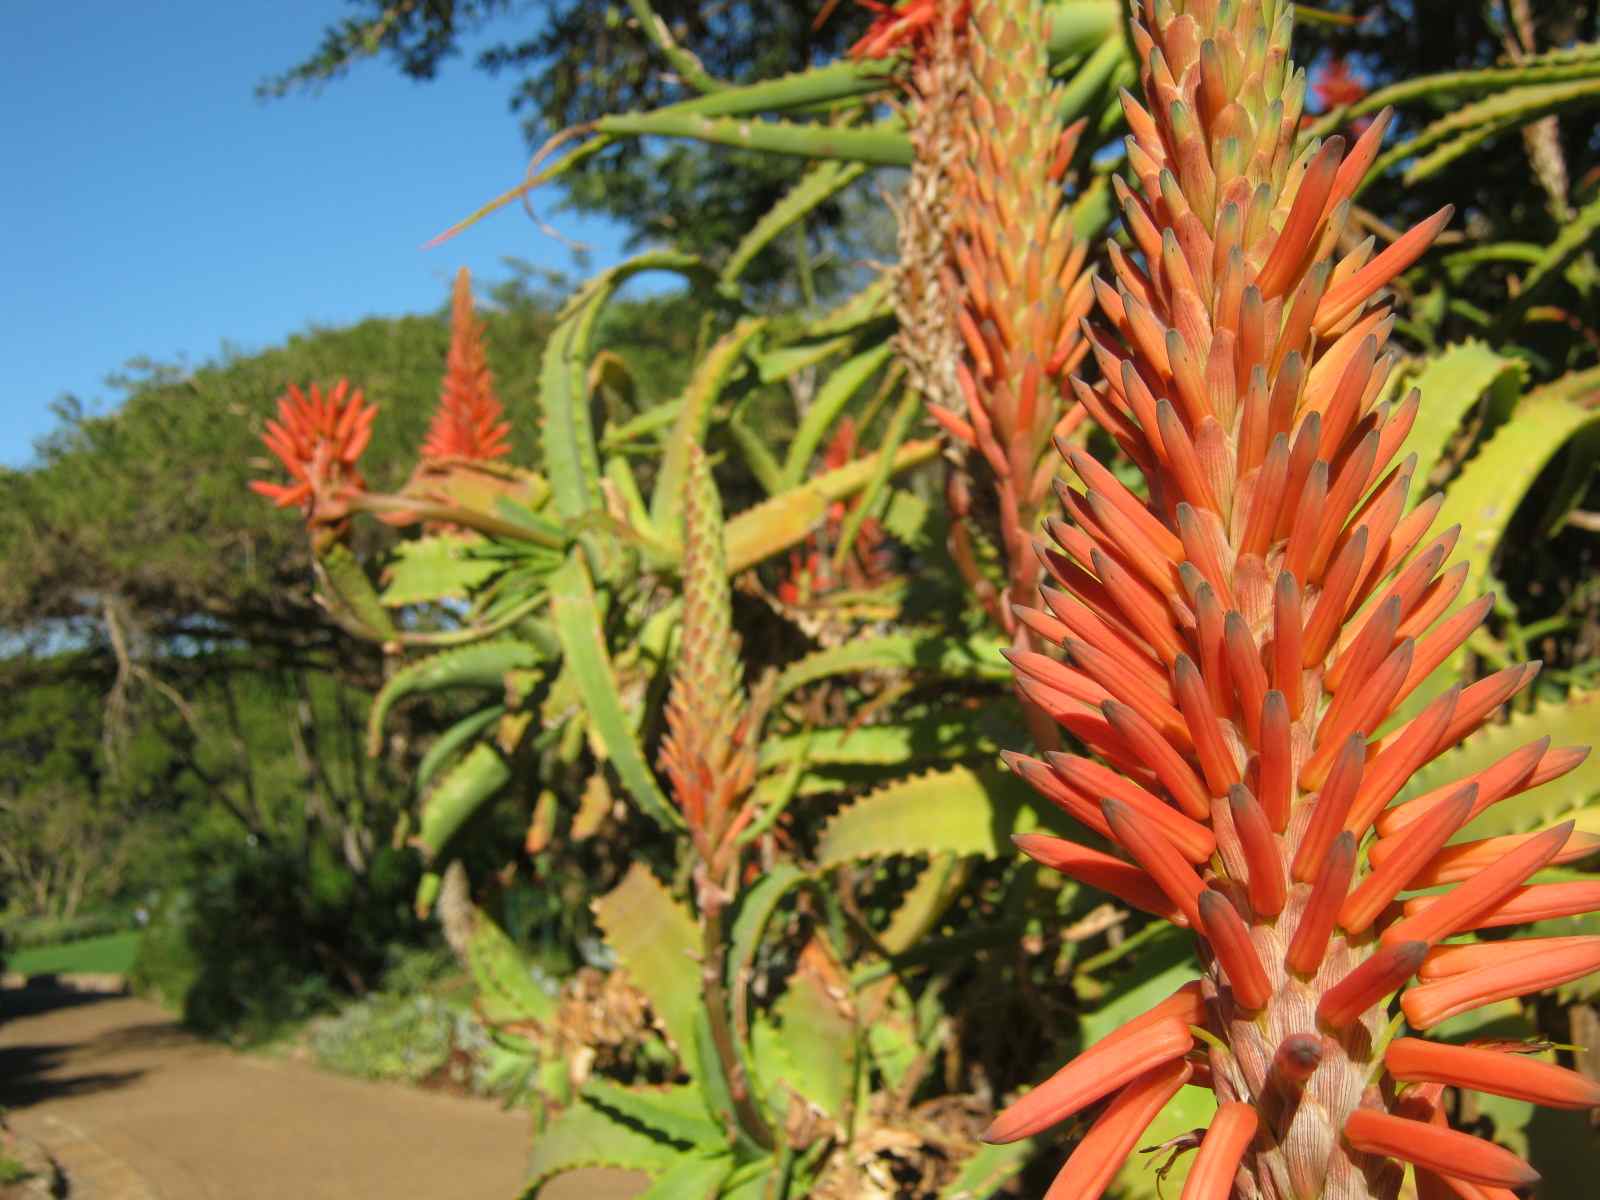 Aloe arboresens tolerates semi shade but loves heat and light